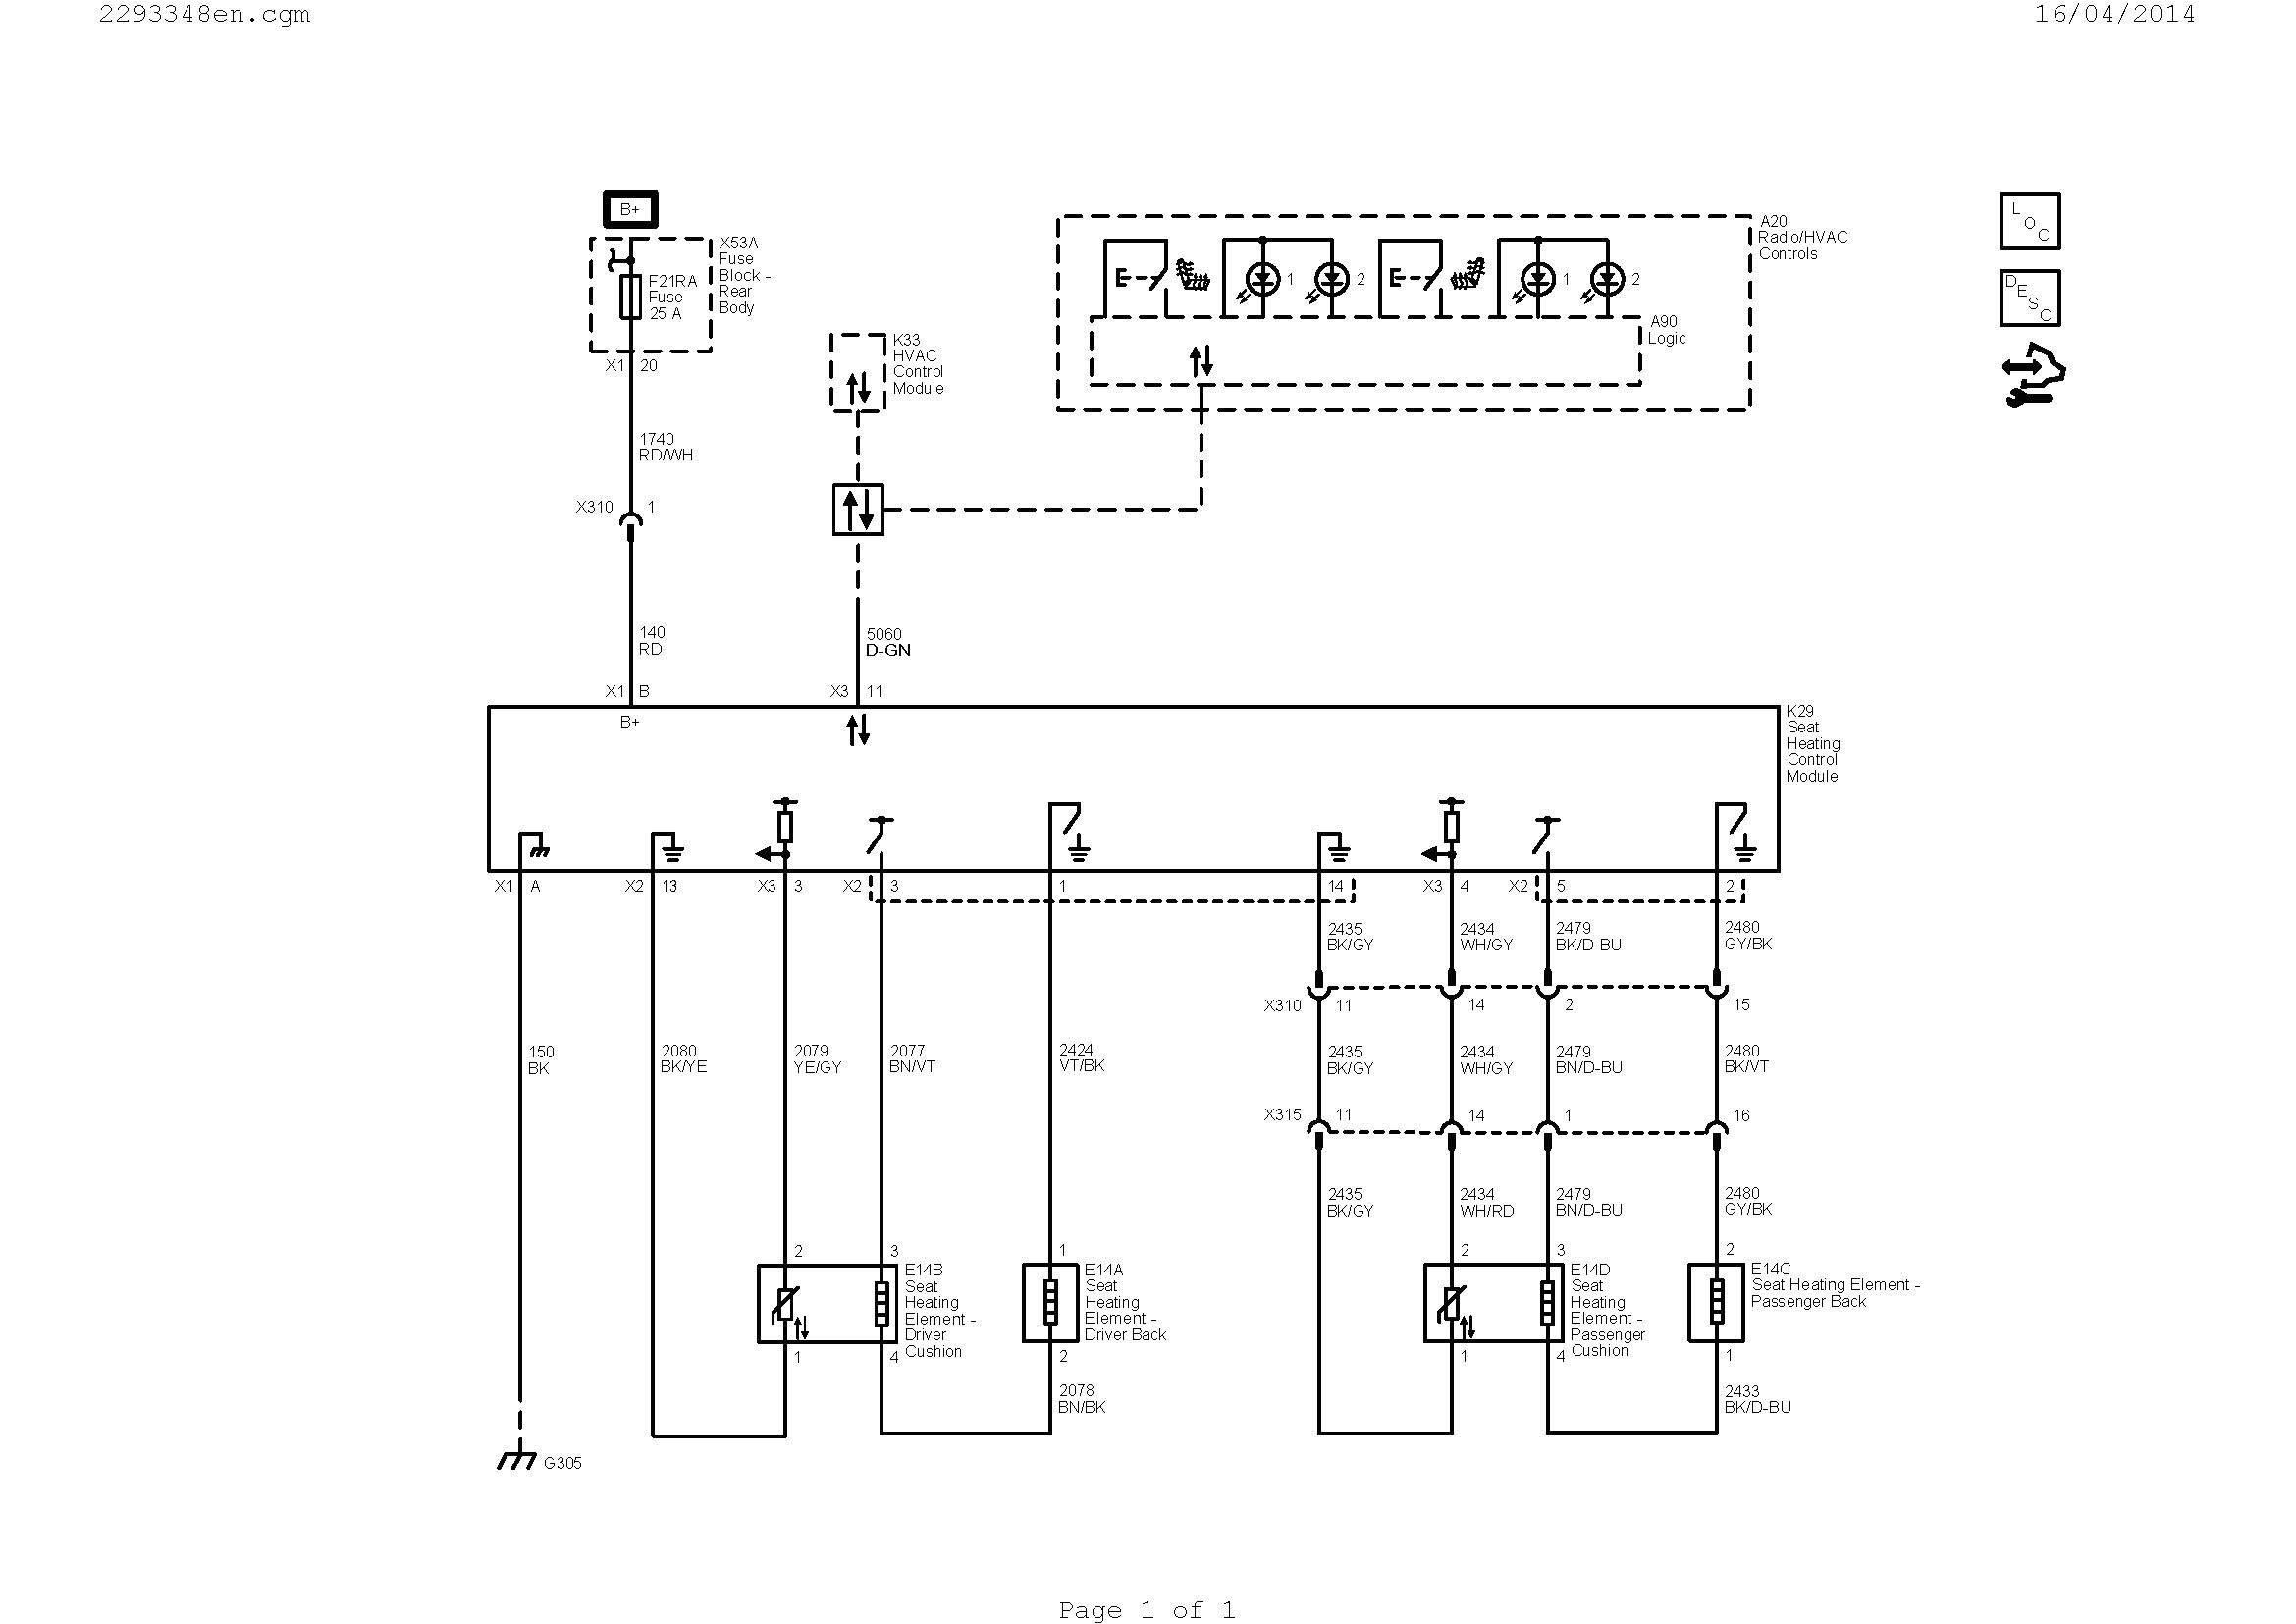 wiring diagrams free download ax7221 wiring diagram user model wiring carlin diagram 4223002 wiring diagram ebook